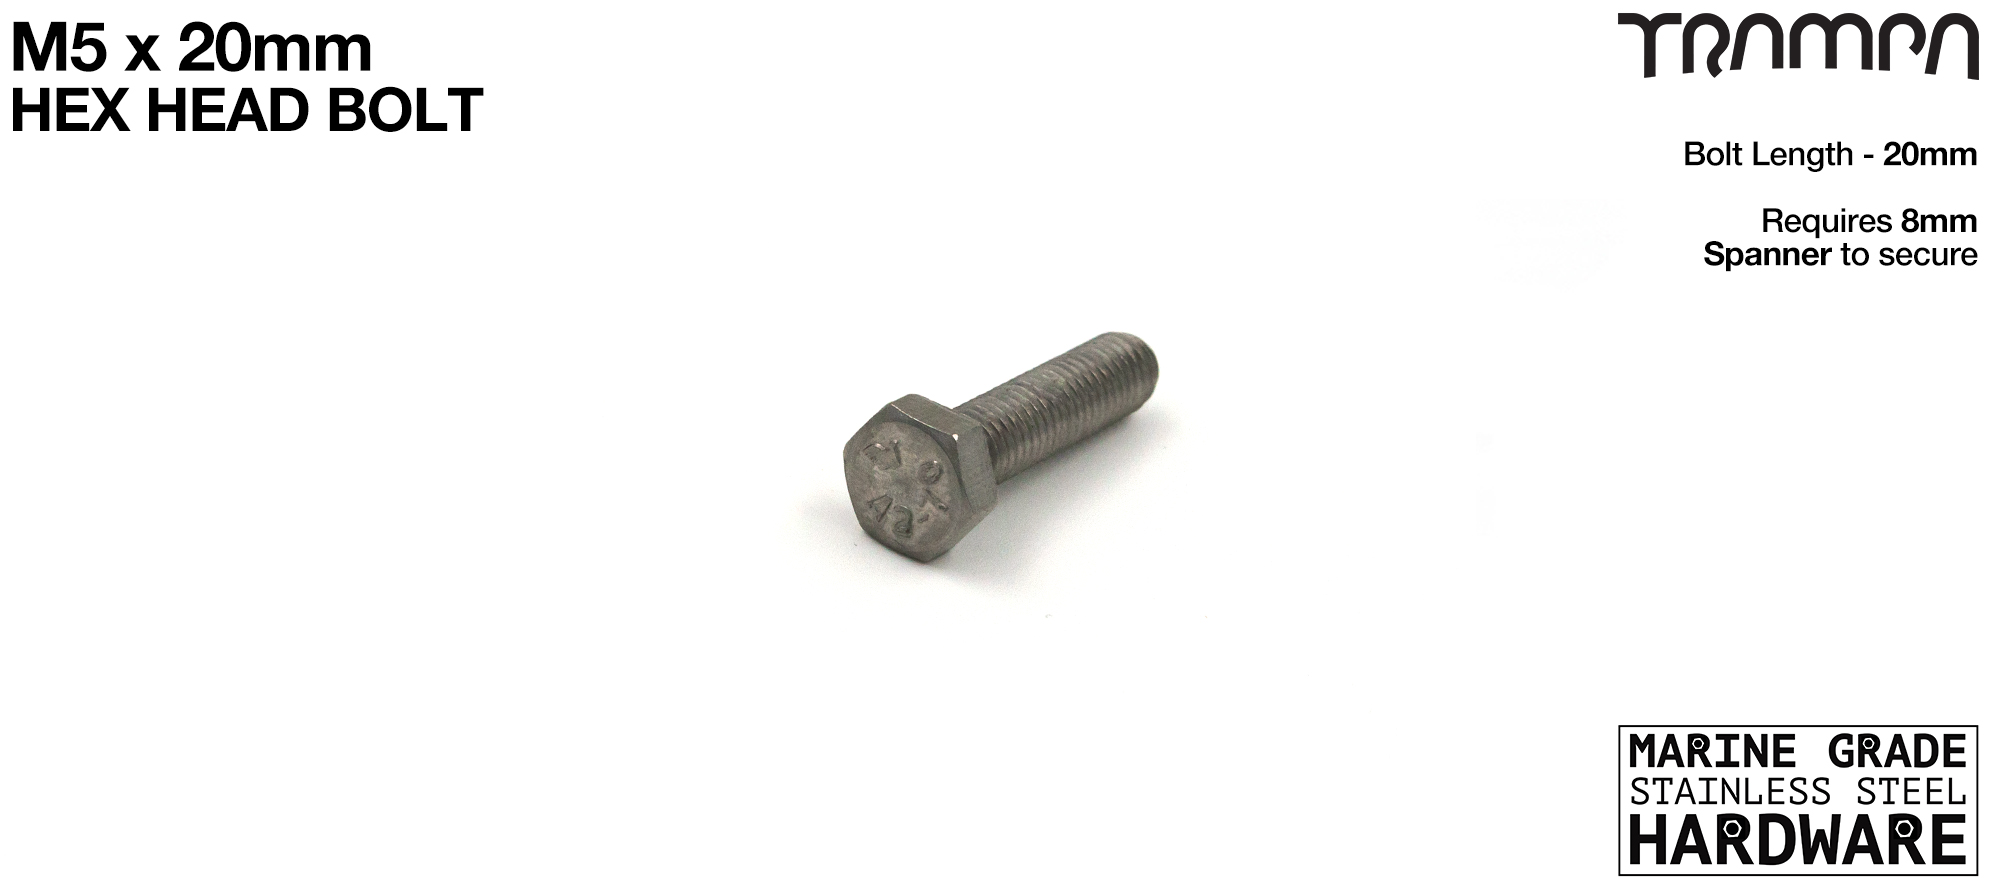 M5 x 20mm Regular Hex Head Bolt - Marine Grade Stainless steel with locking paste